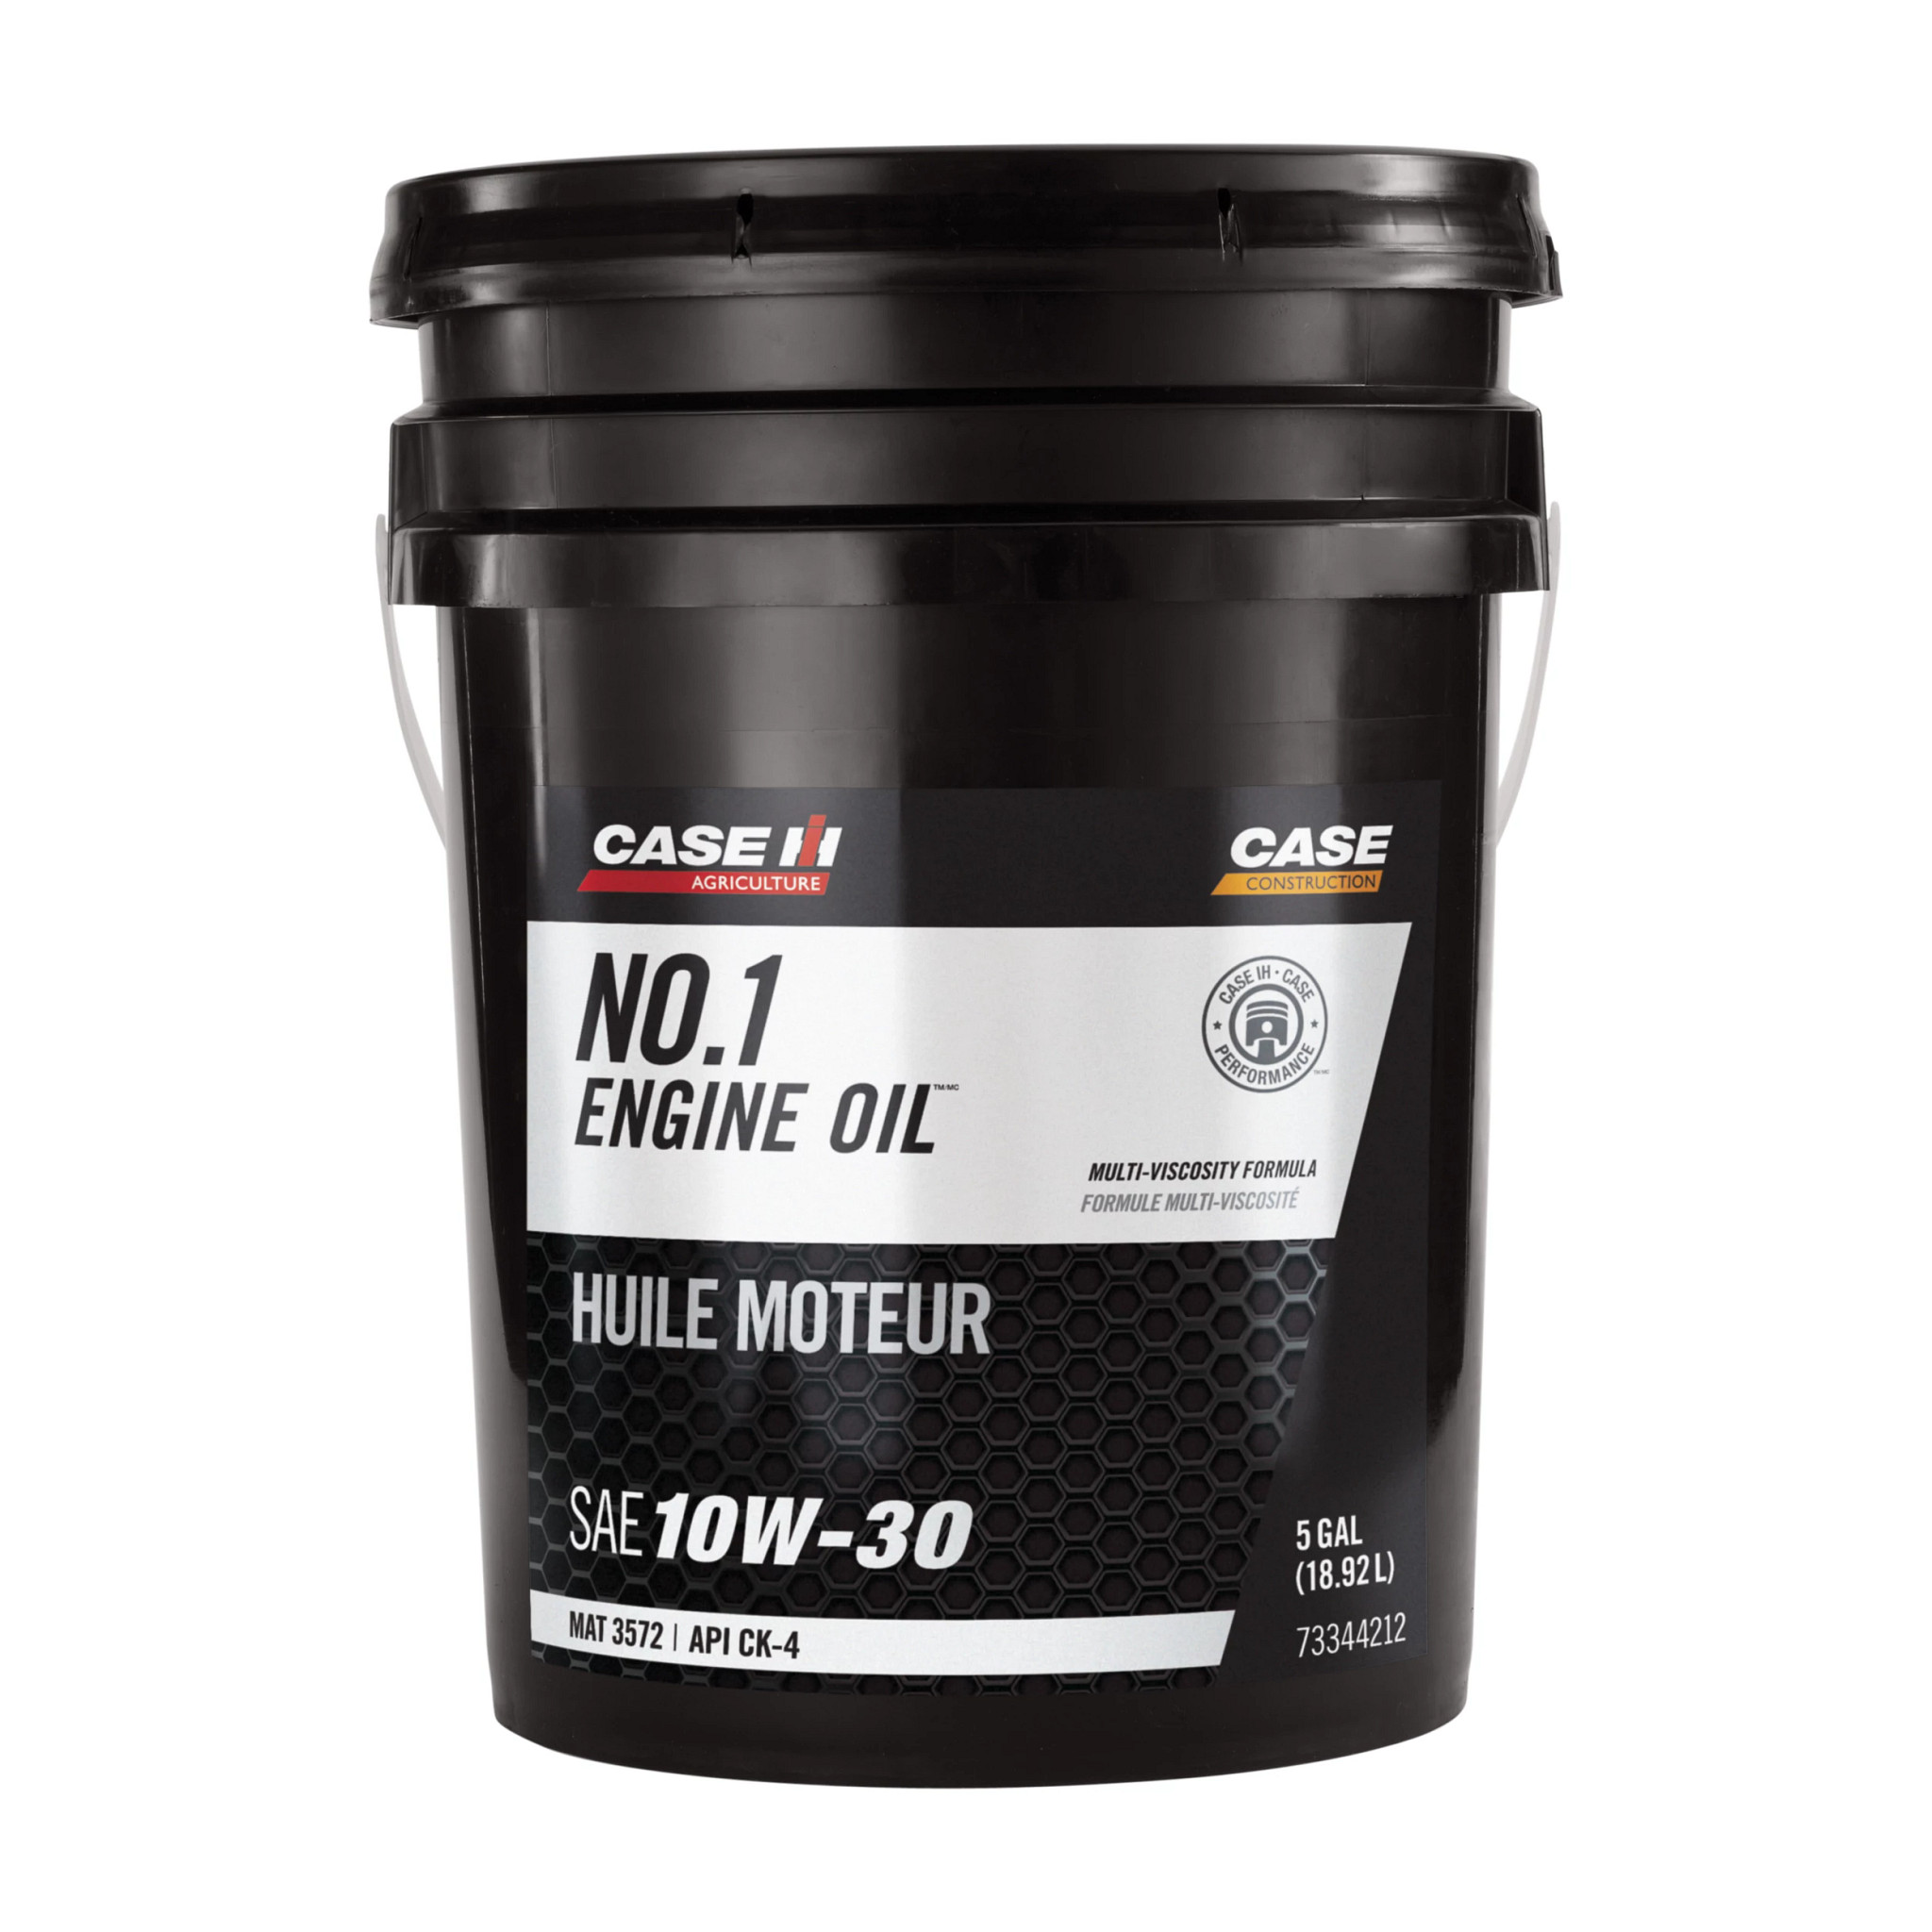 Case IH | No.1 Engine Oil™ - SAE 10W-30 - API CK-4 - MAT 3572 - 5 